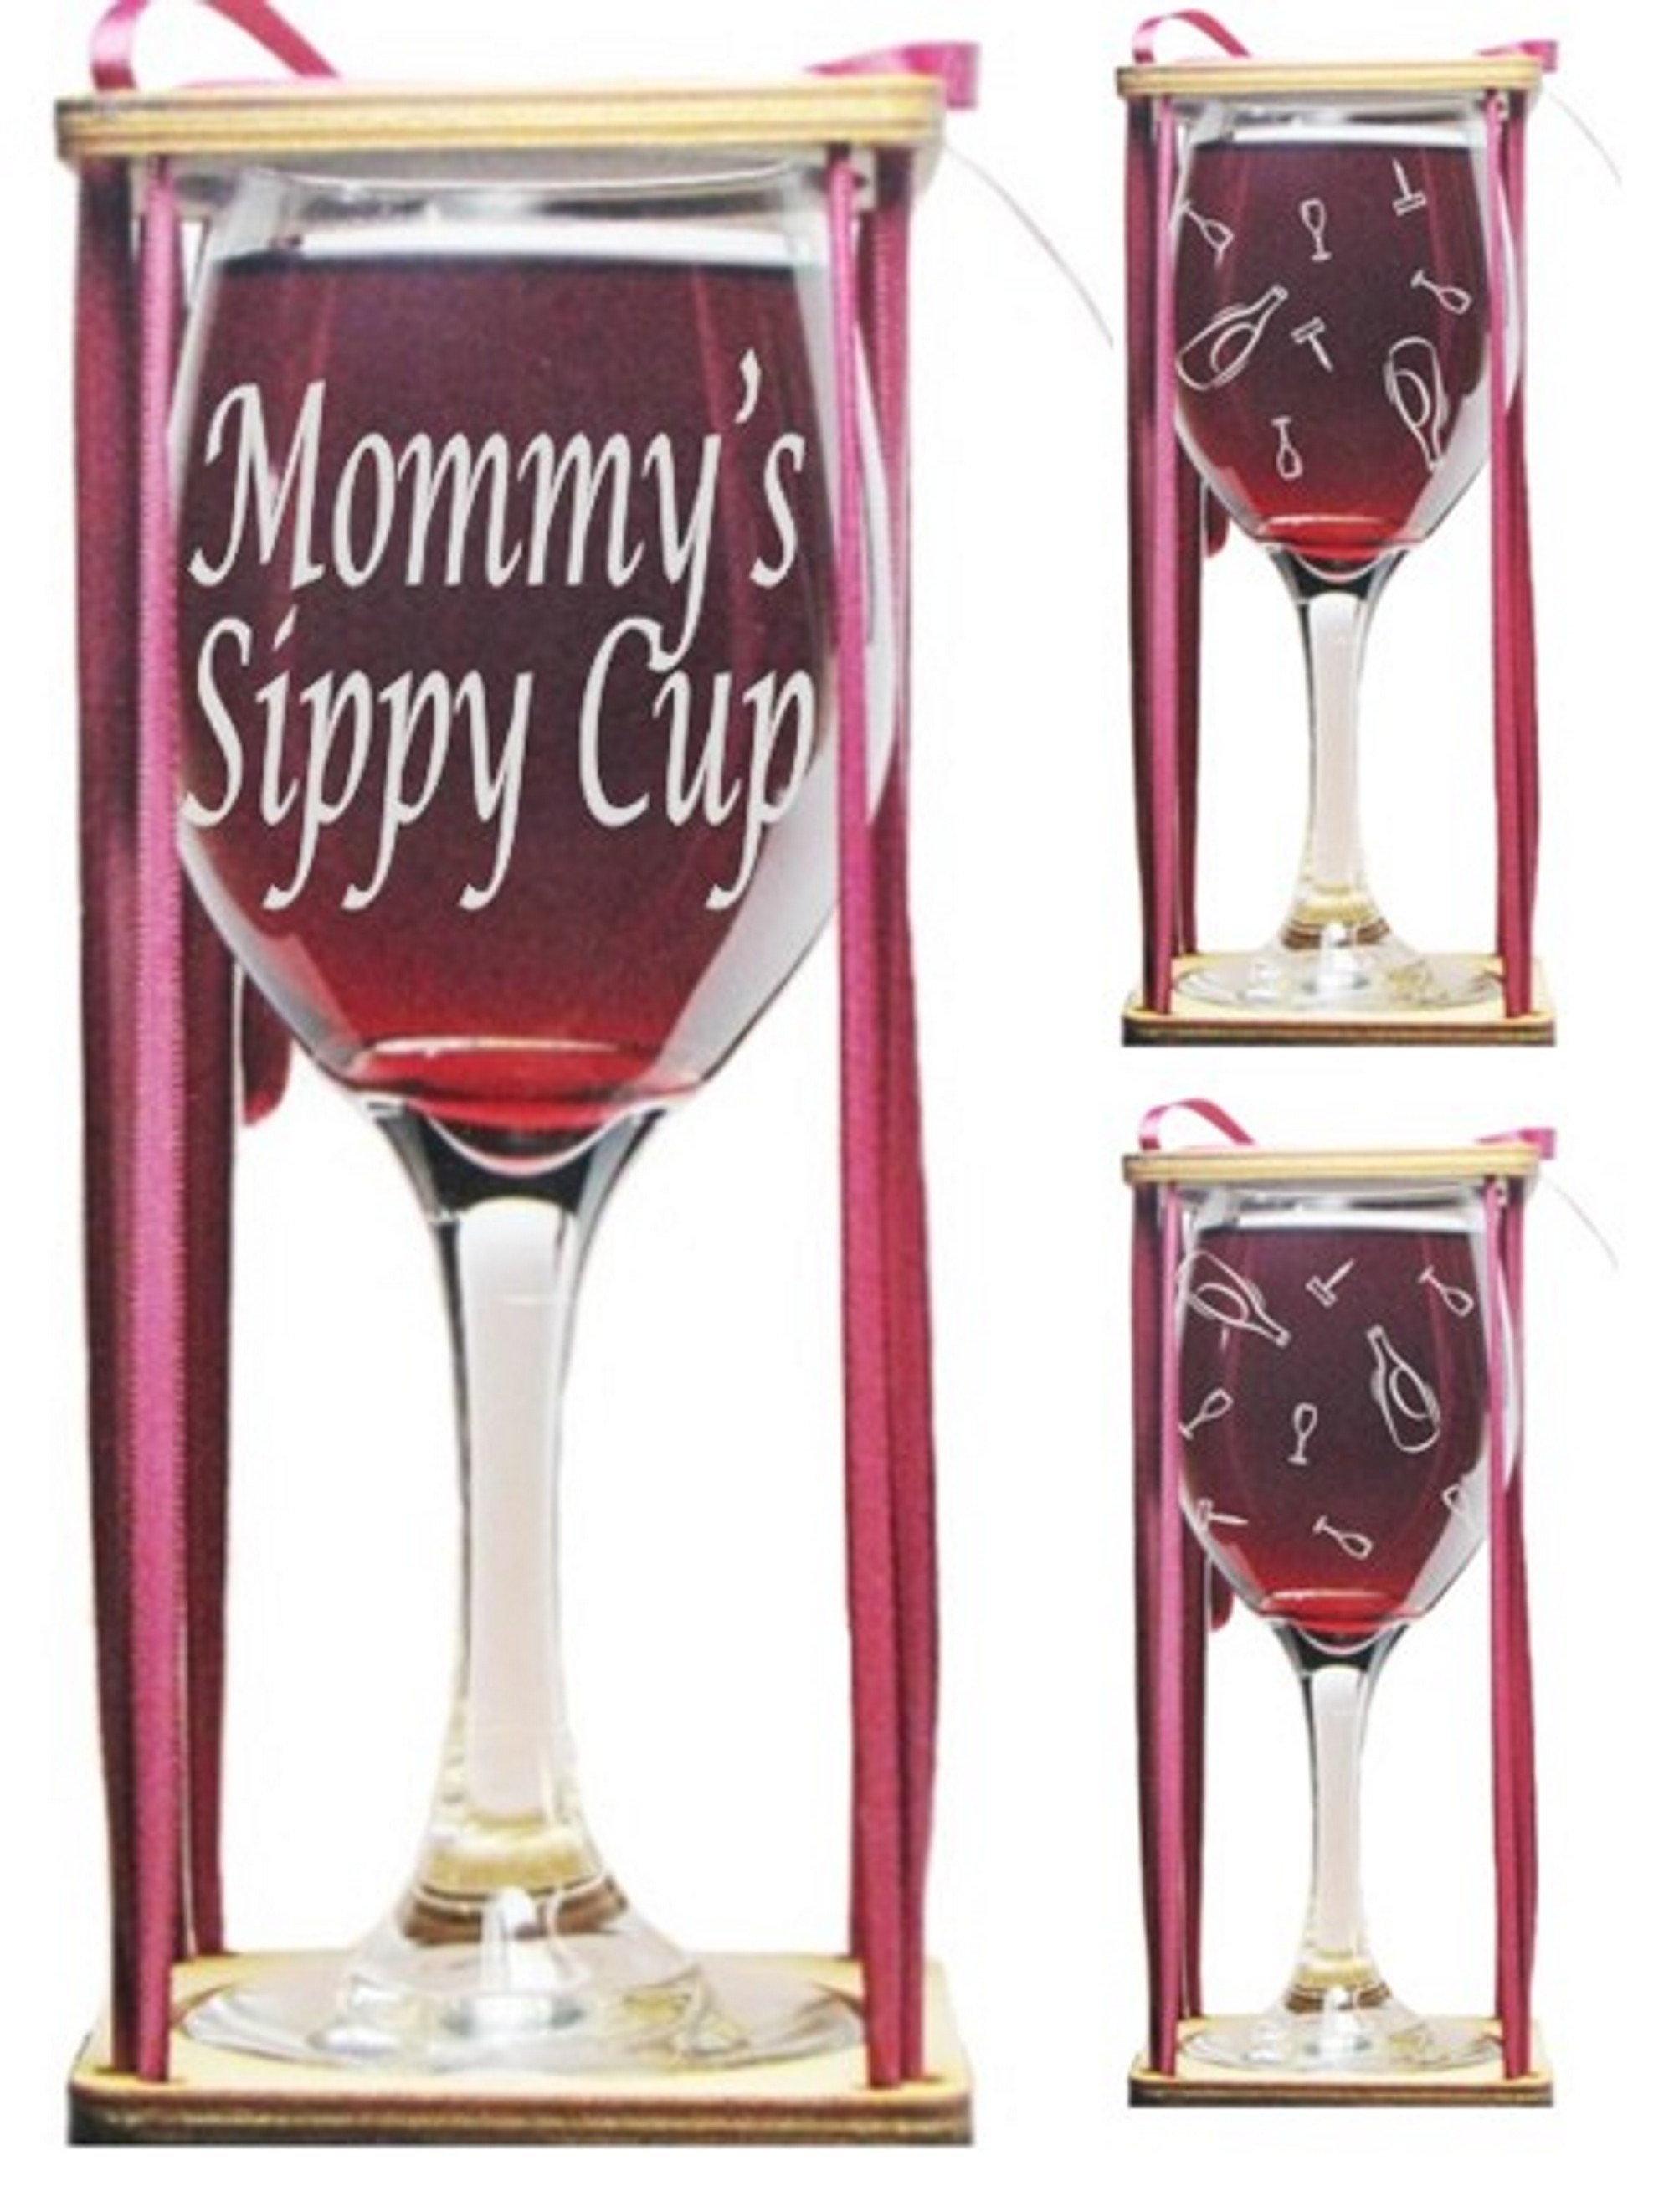 Daylily SIPSIP Wine Glass | The Wine Glass with a Straw